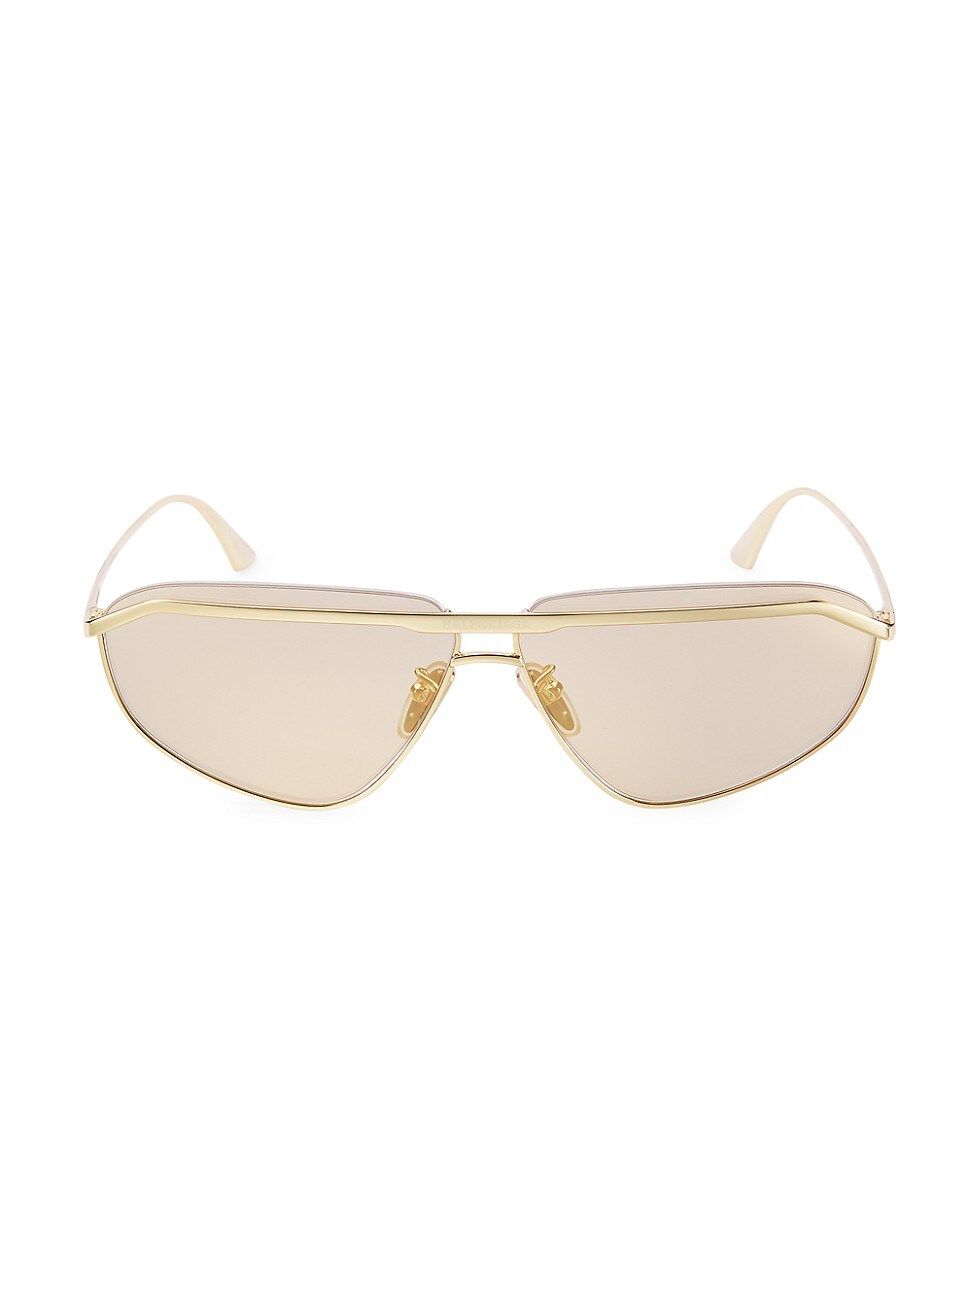 Balenciaga Women's 66MM Rectangular Sunglasses - Gold | Saks Fifth Avenue